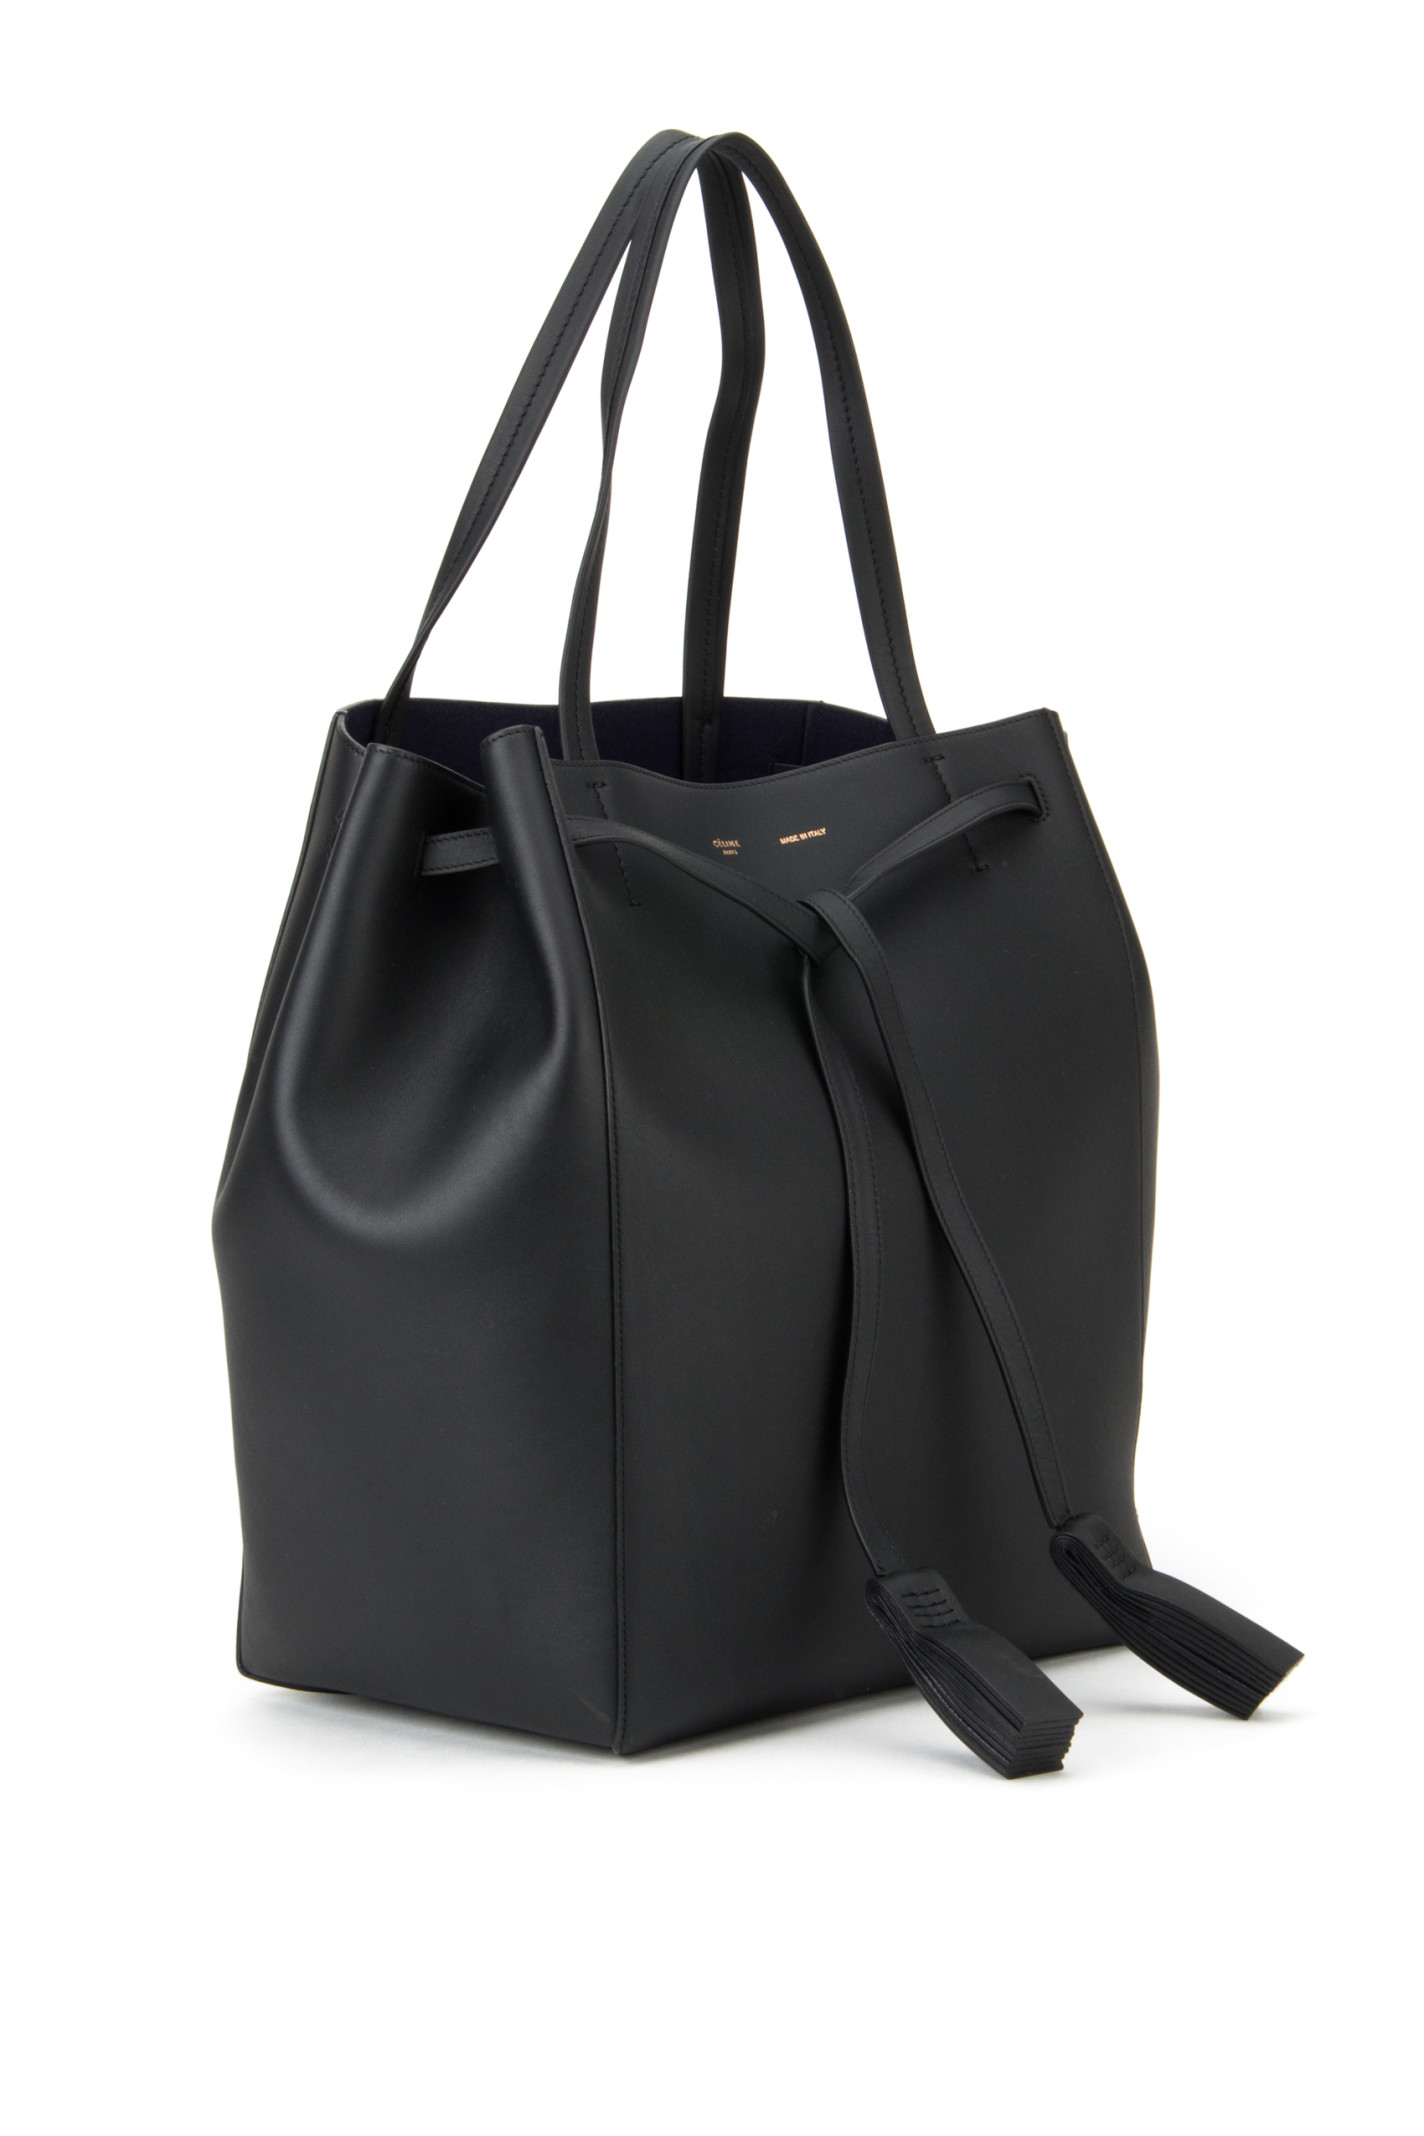 celine grey leather handbag cabas phantom, celine luggage bag buy online